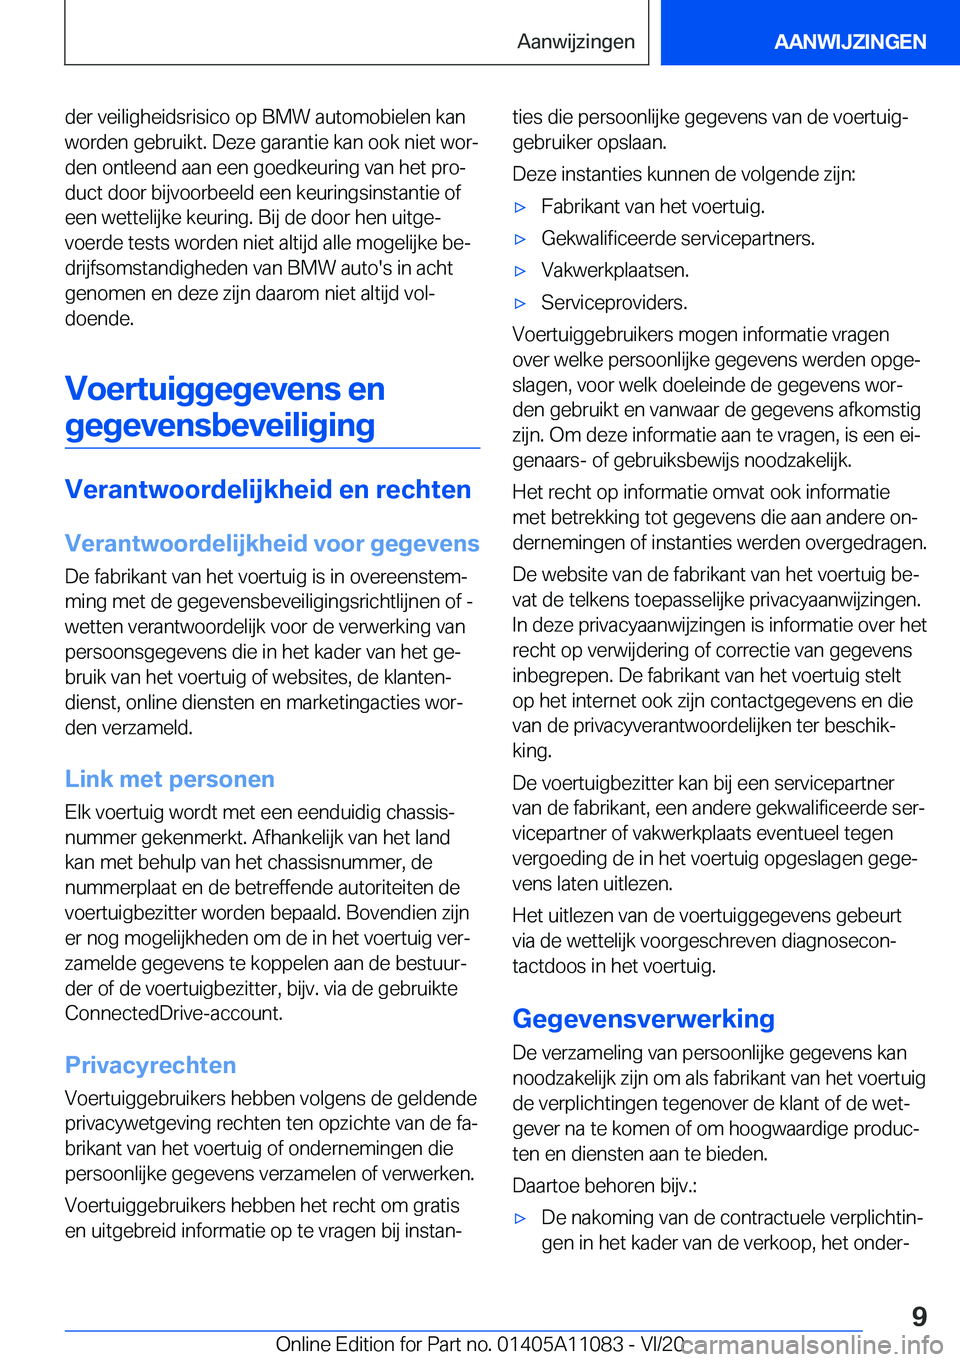 BMW 7 SERIES 2021  Instructieboekjes (in Dutch) �d�e�r��v�e�i�l�i�g�h�e�i�d�s�r�i�s�i�c�o��o�p��B�M�W��a�u�t�o�m�o�b�i�e�l�e�n��k�a�n
�w�o�r�d�e�n��g�e�b�r�u�i�k�t�.��D�e�z�e��g�a�r�a�n�t�i�e��k�a�n��o�o�k��n�i�e�t��w�o�rj
�d�e�n��o�n